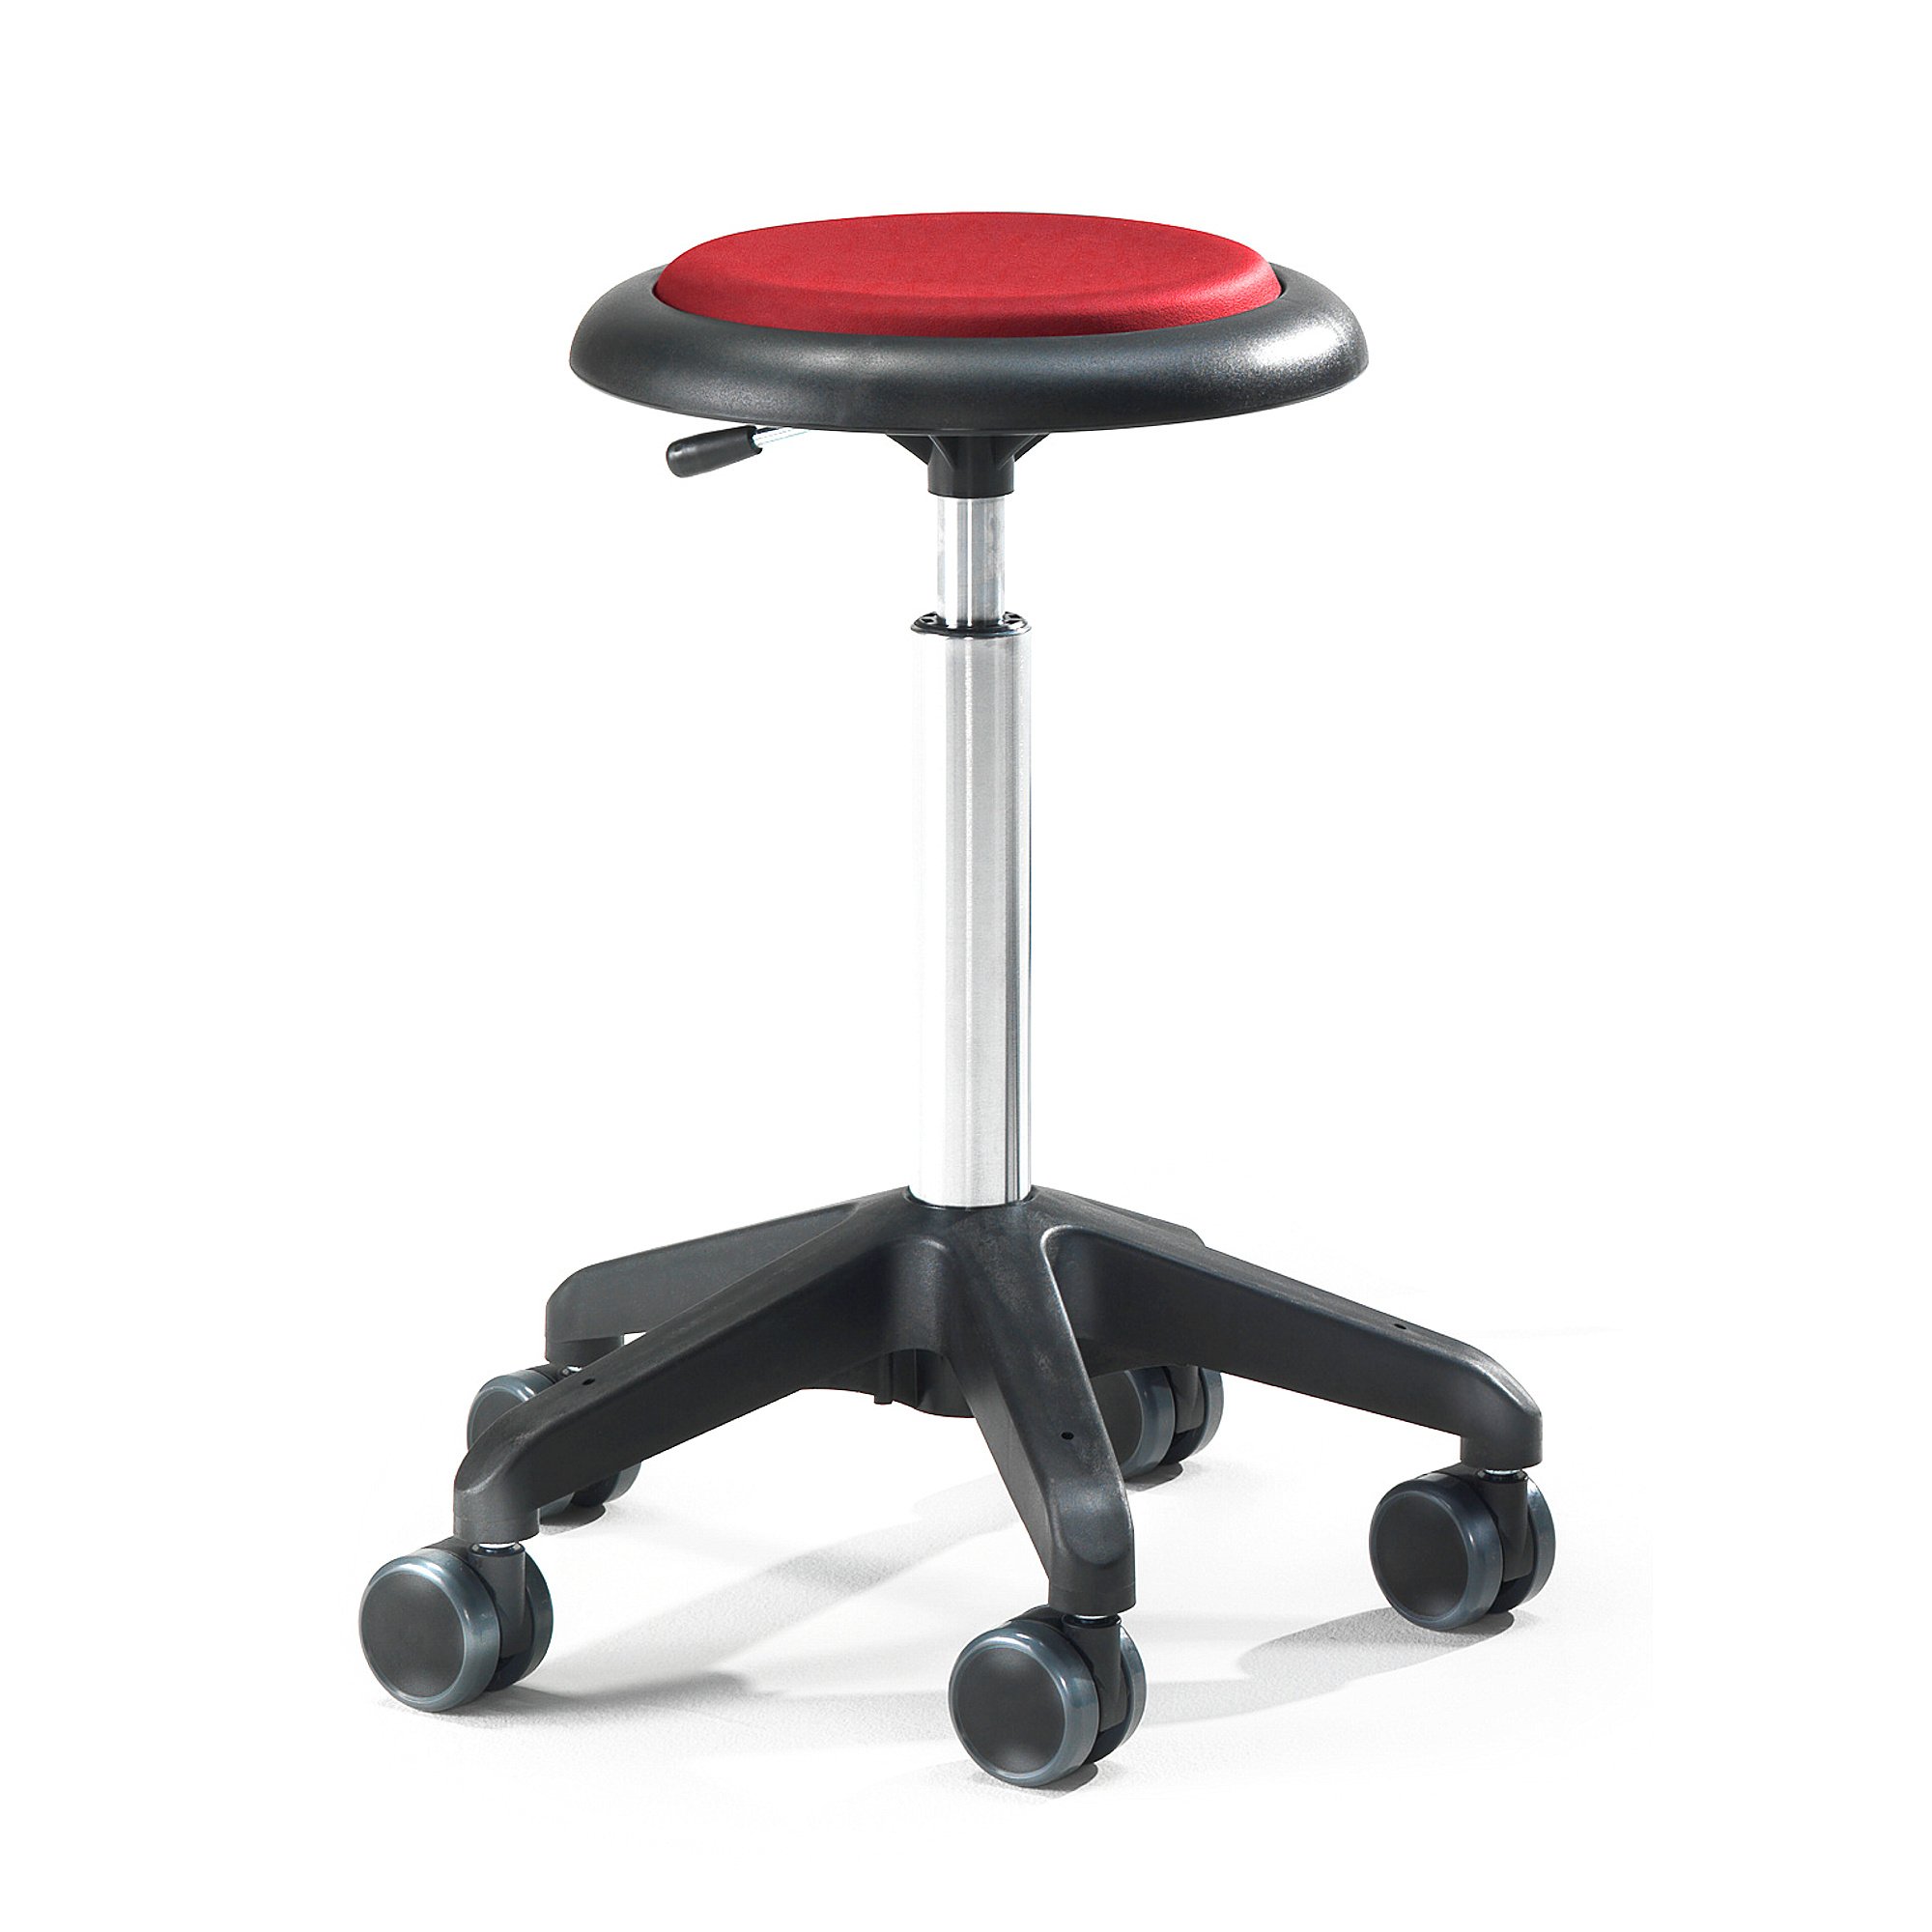 Pracovní stolička DIEGO, výška 540-730 mm, mikrovlákno, červená